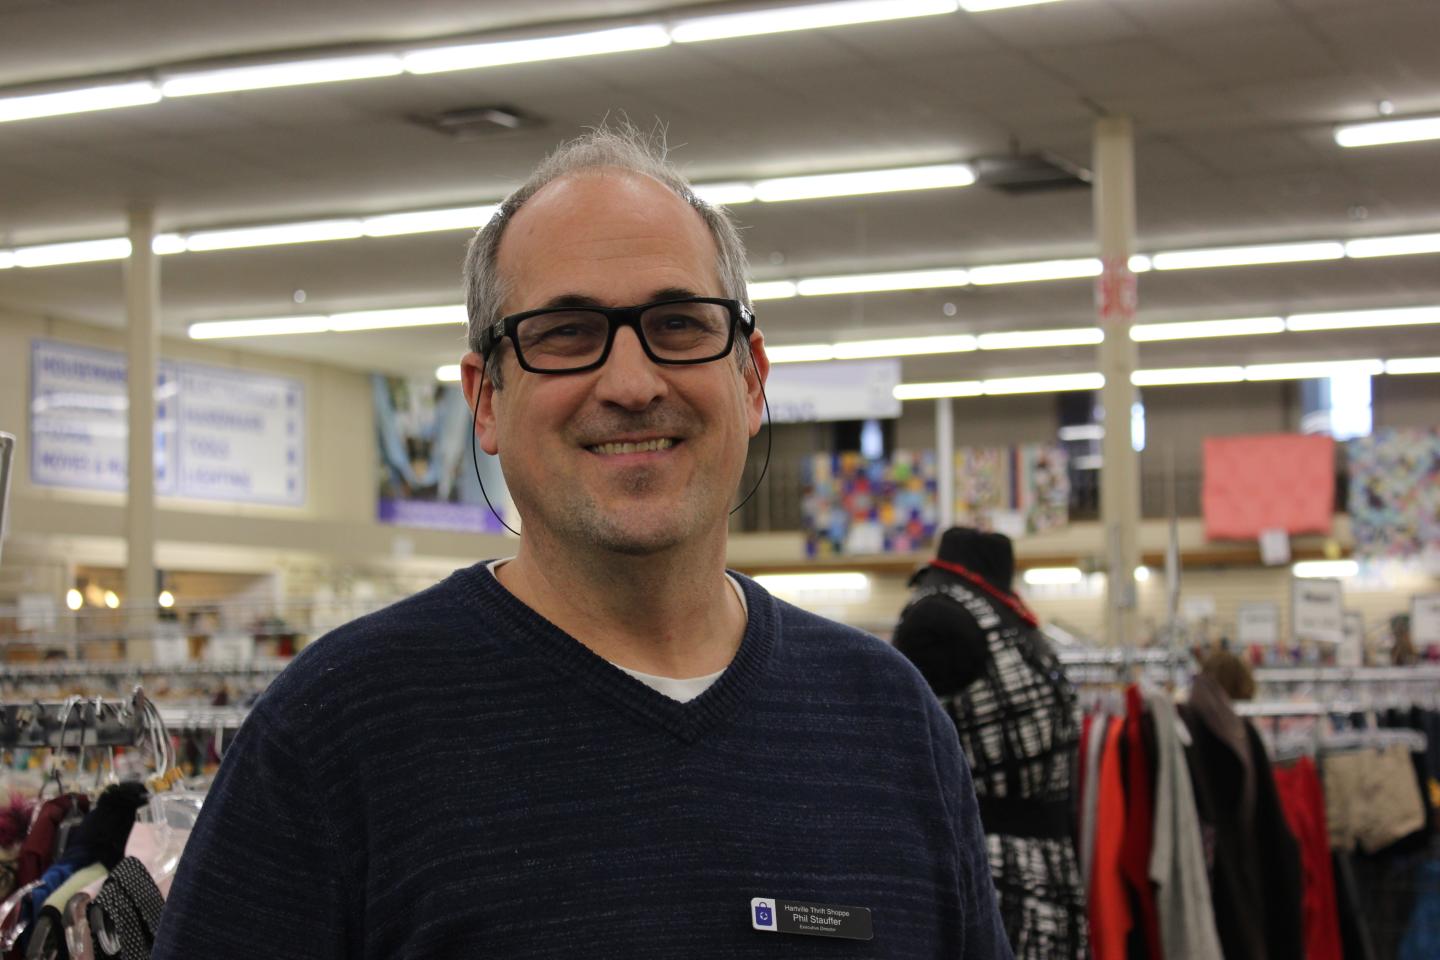 Phil Stauffer, manager of the Hartville Thrift Shoppe on the retail floor.